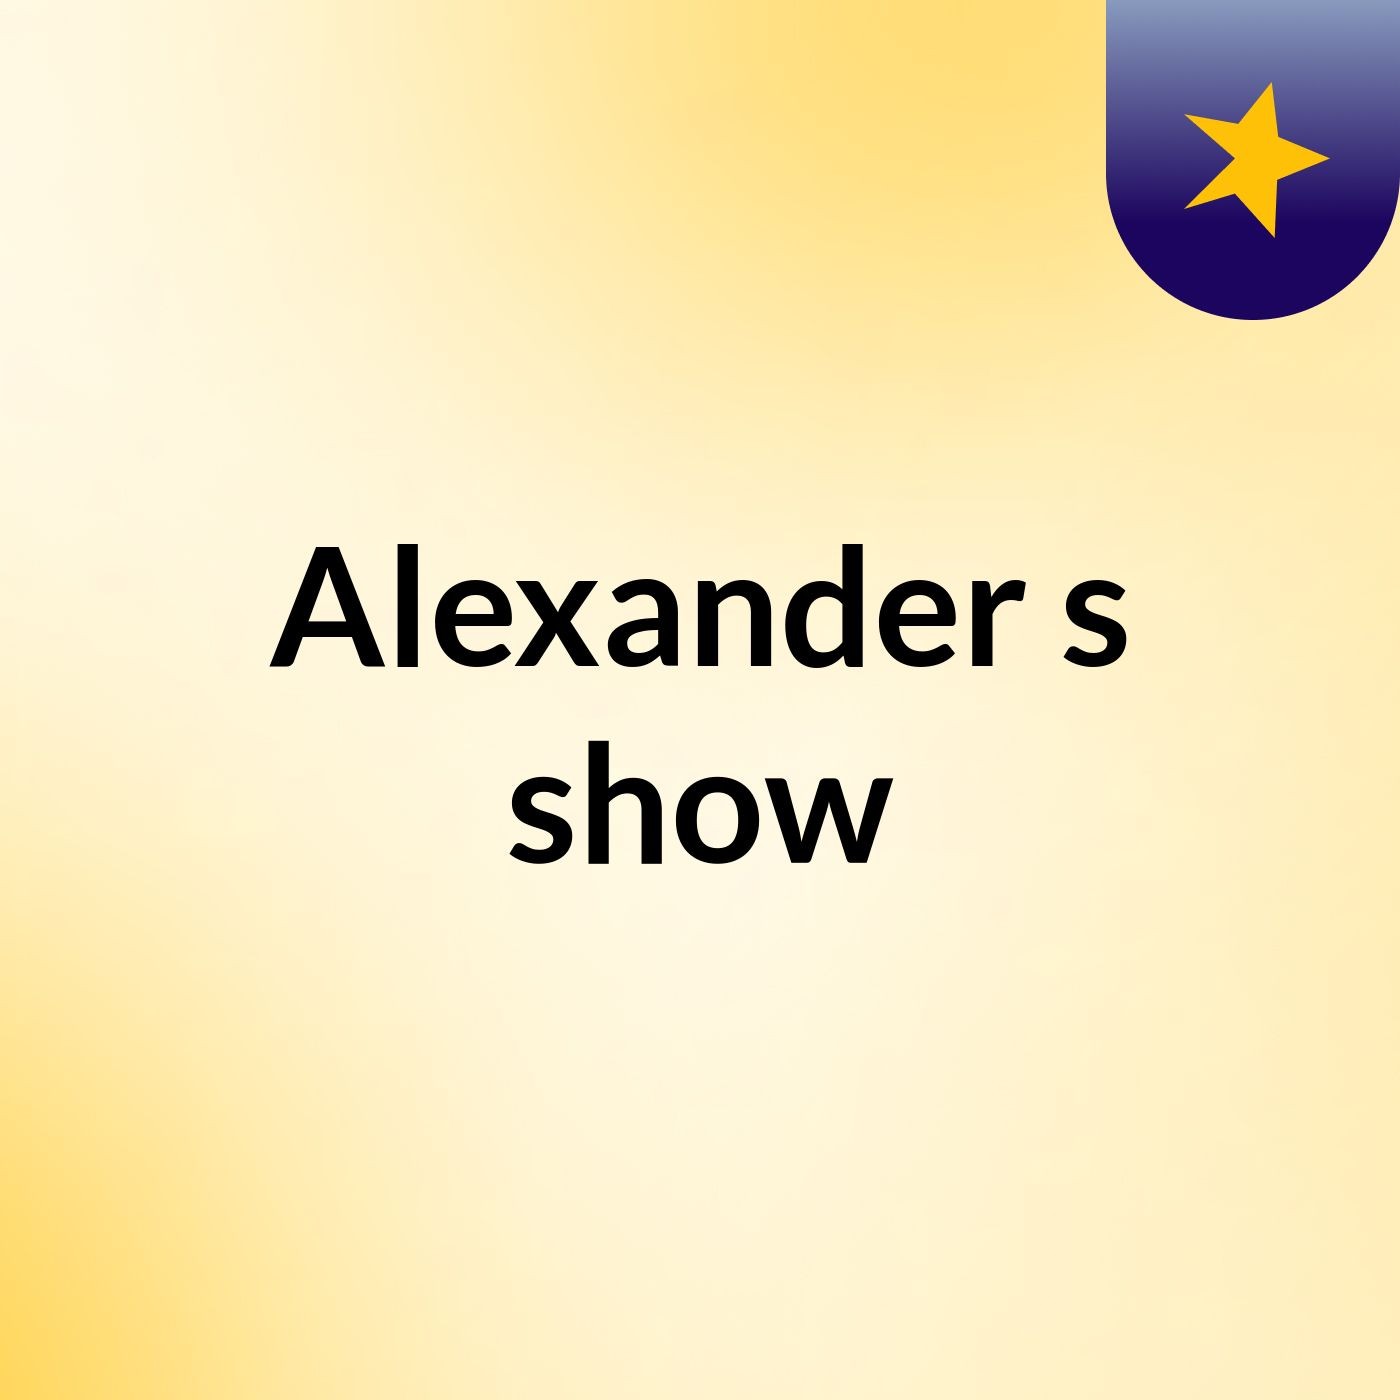 Alexander's show